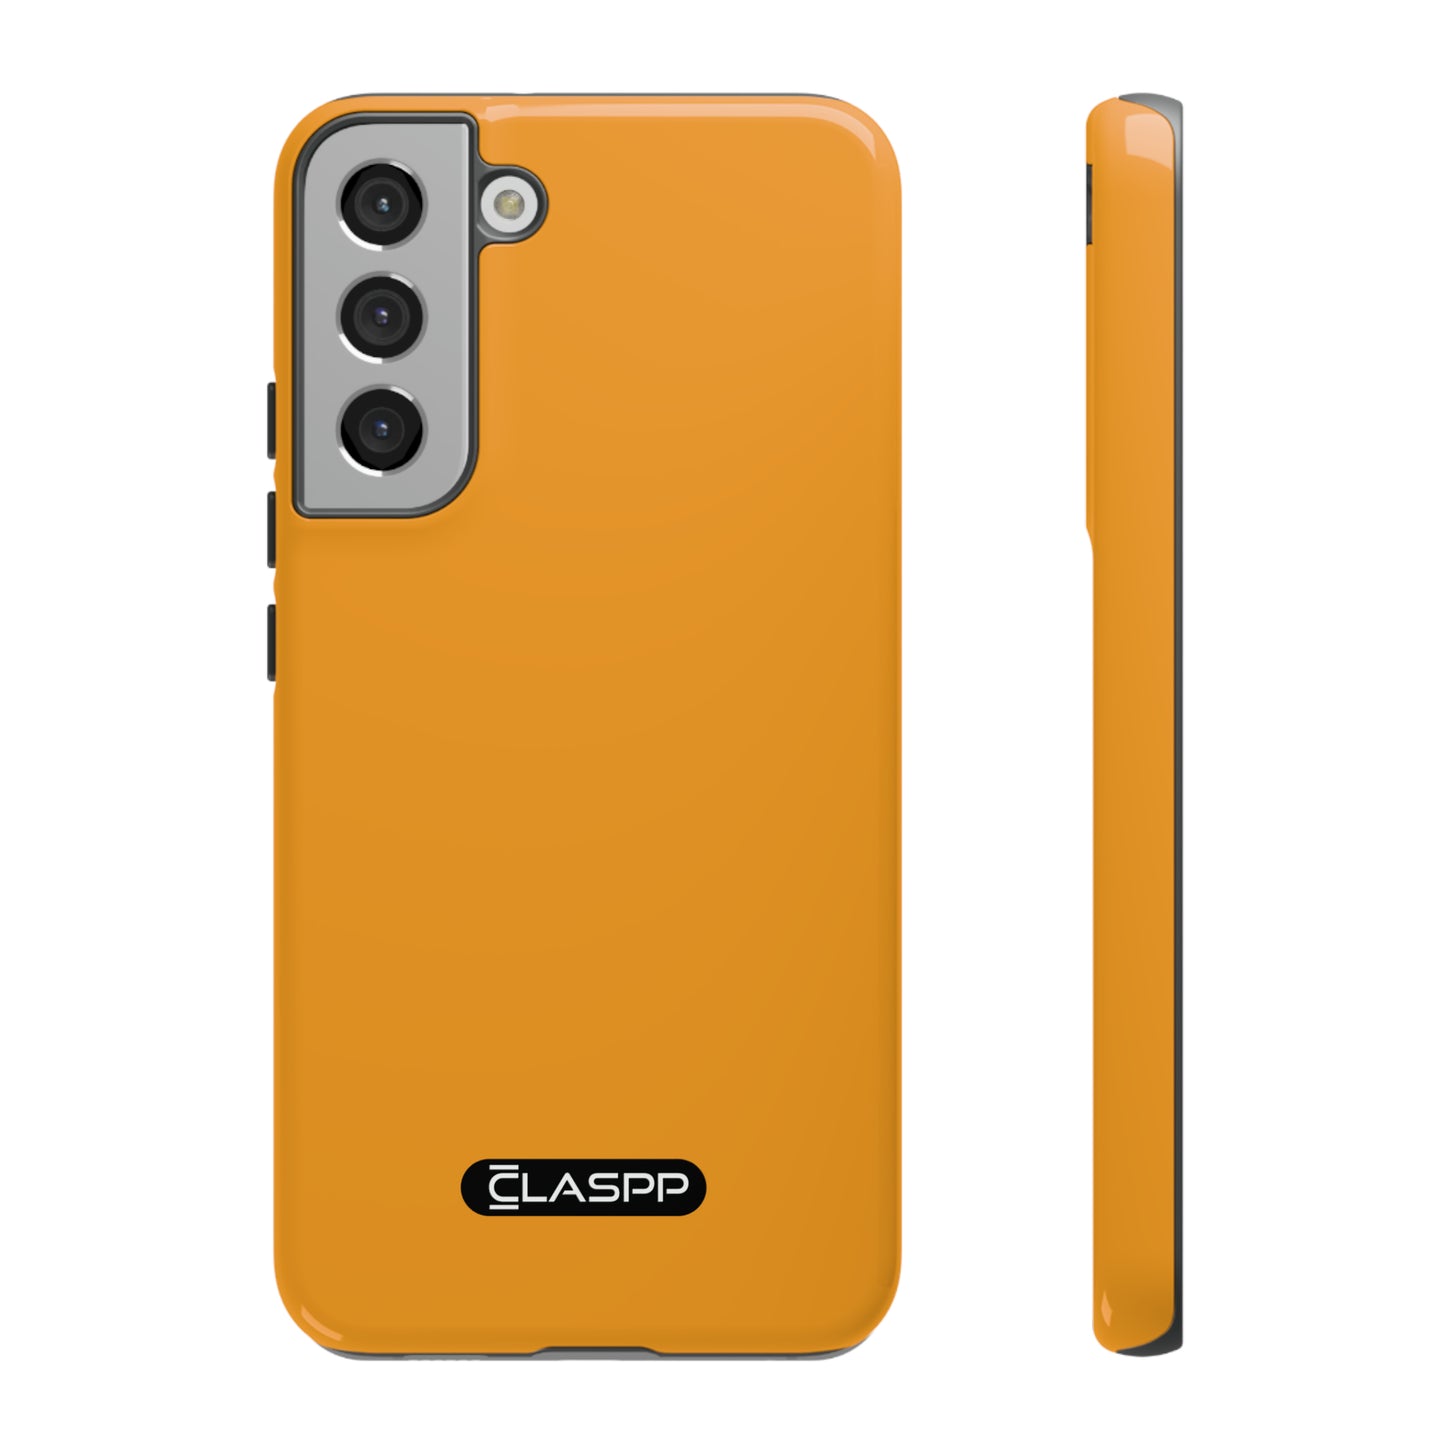 Safari Gold | Hardshell Dual Layer Phone Case